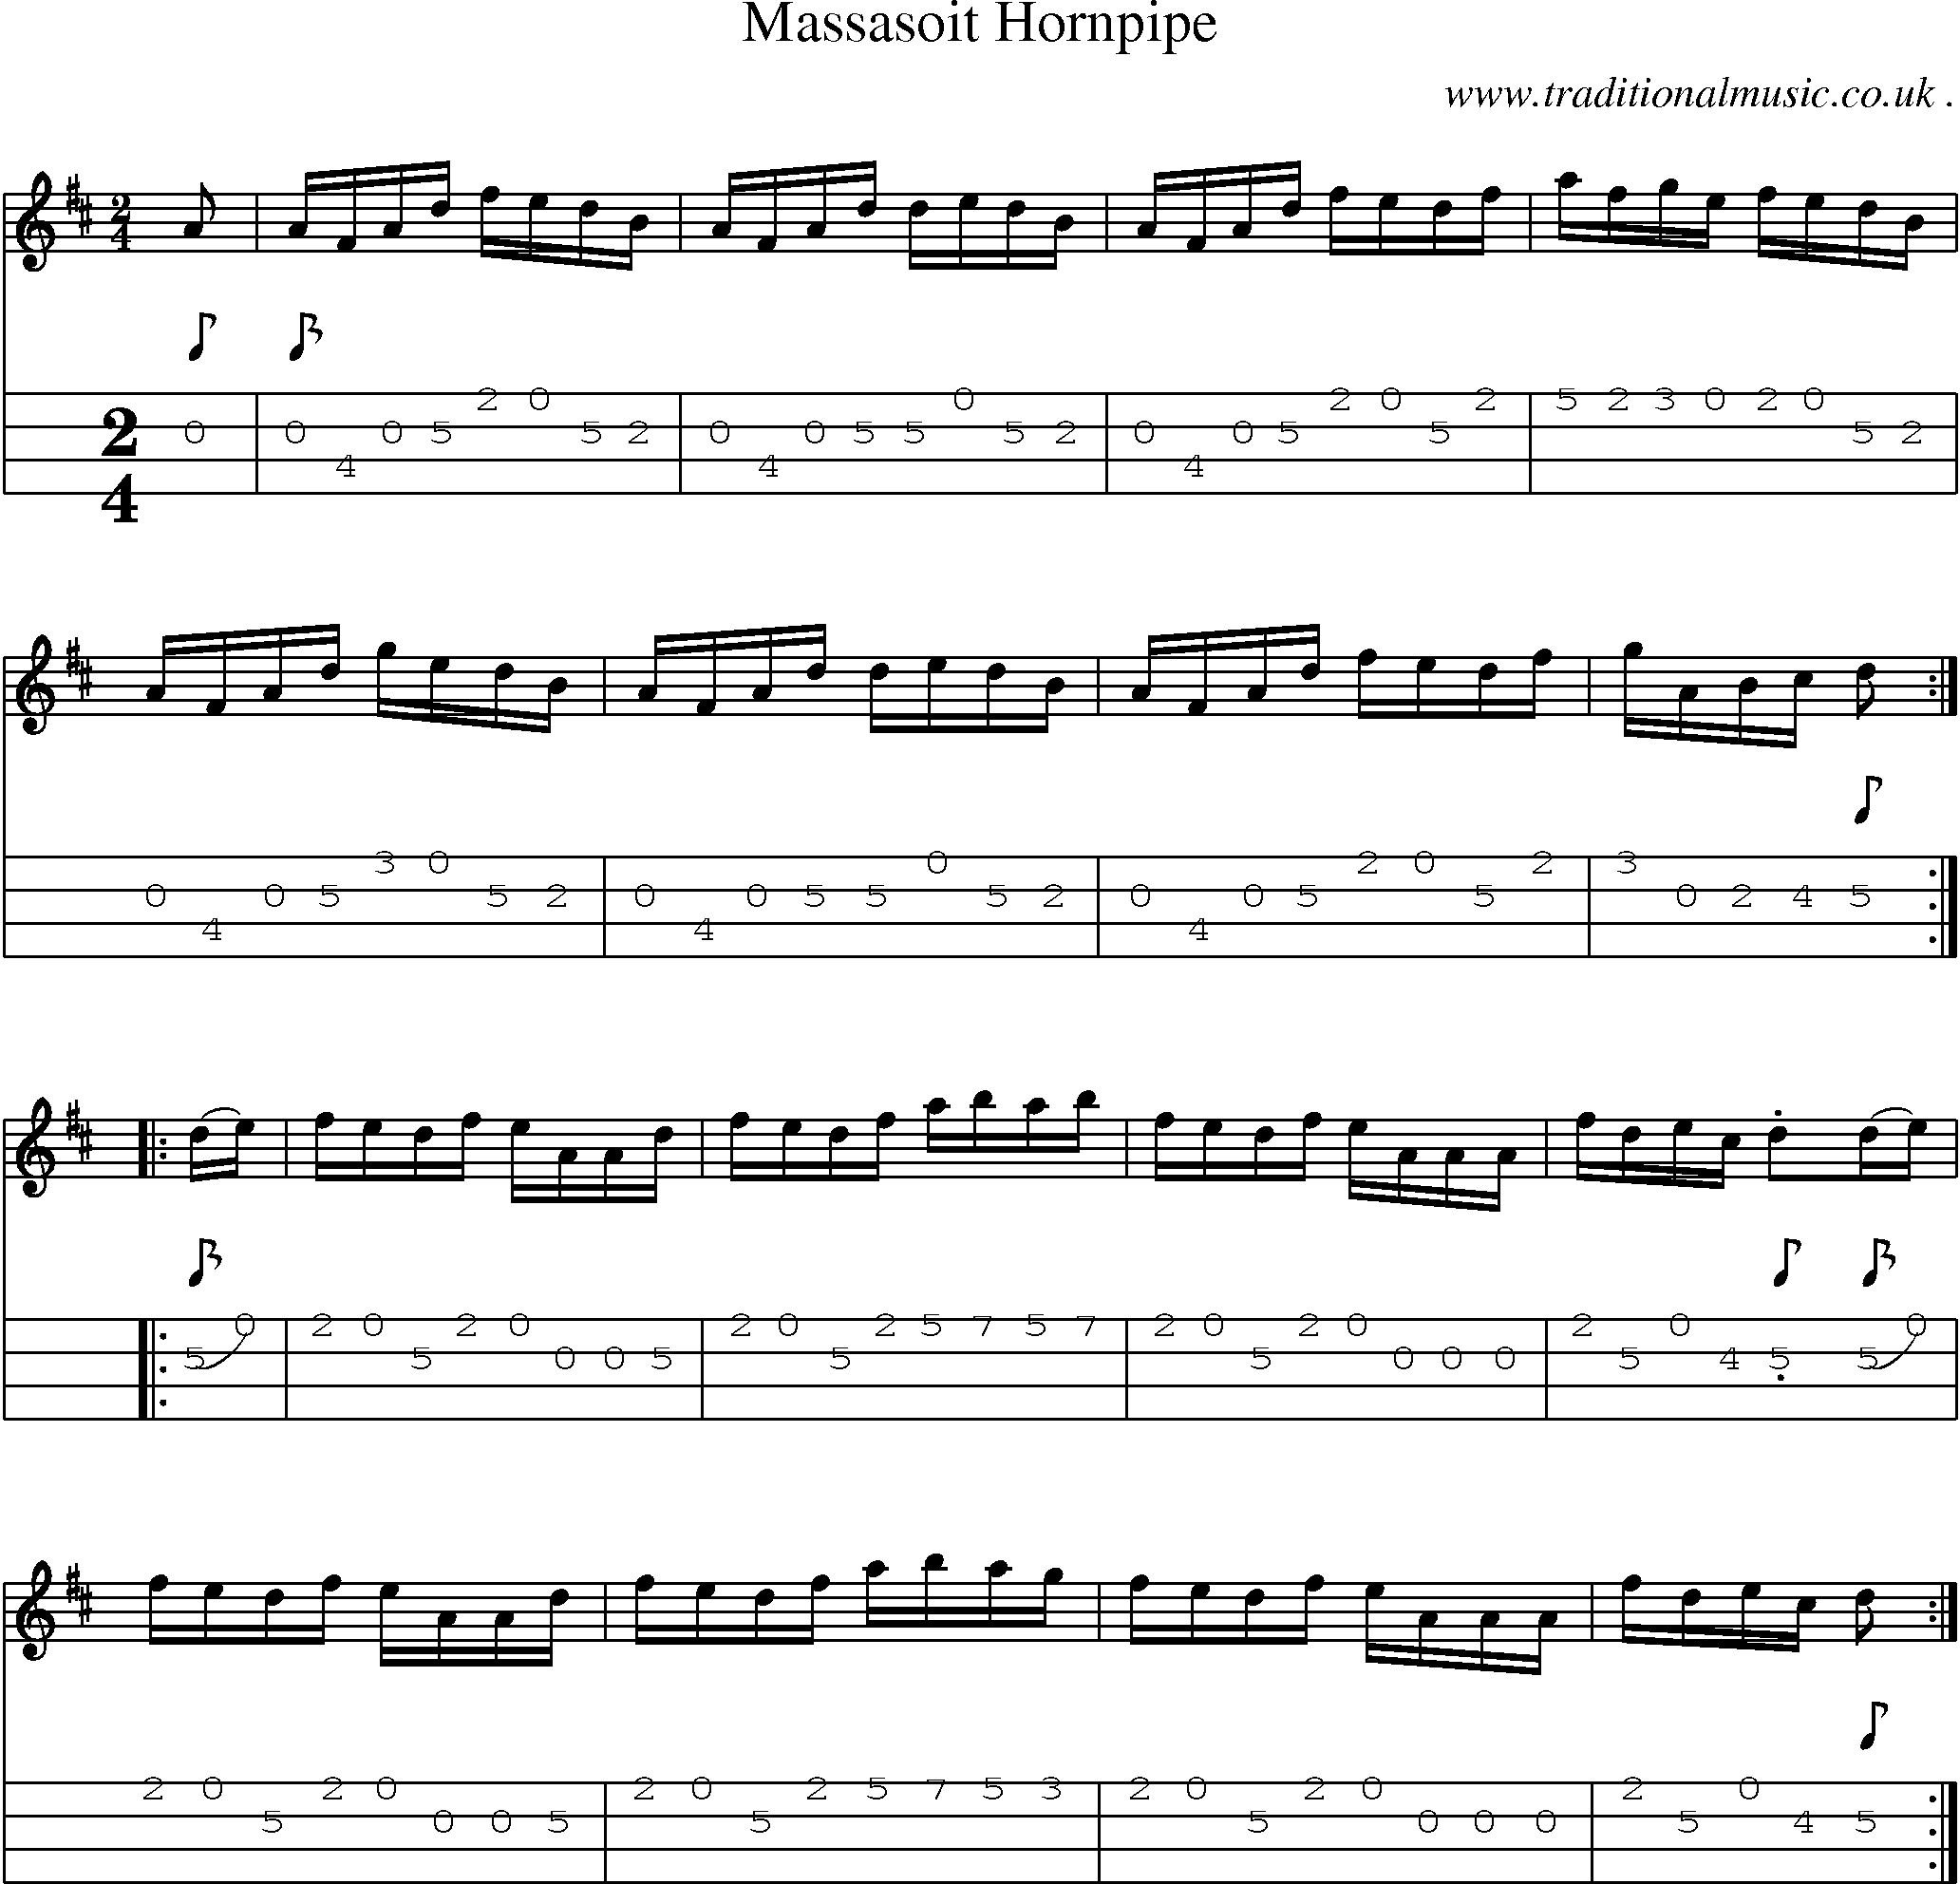 Sheet-Music and Mandolin Tabs for Massasoit Hornpipe